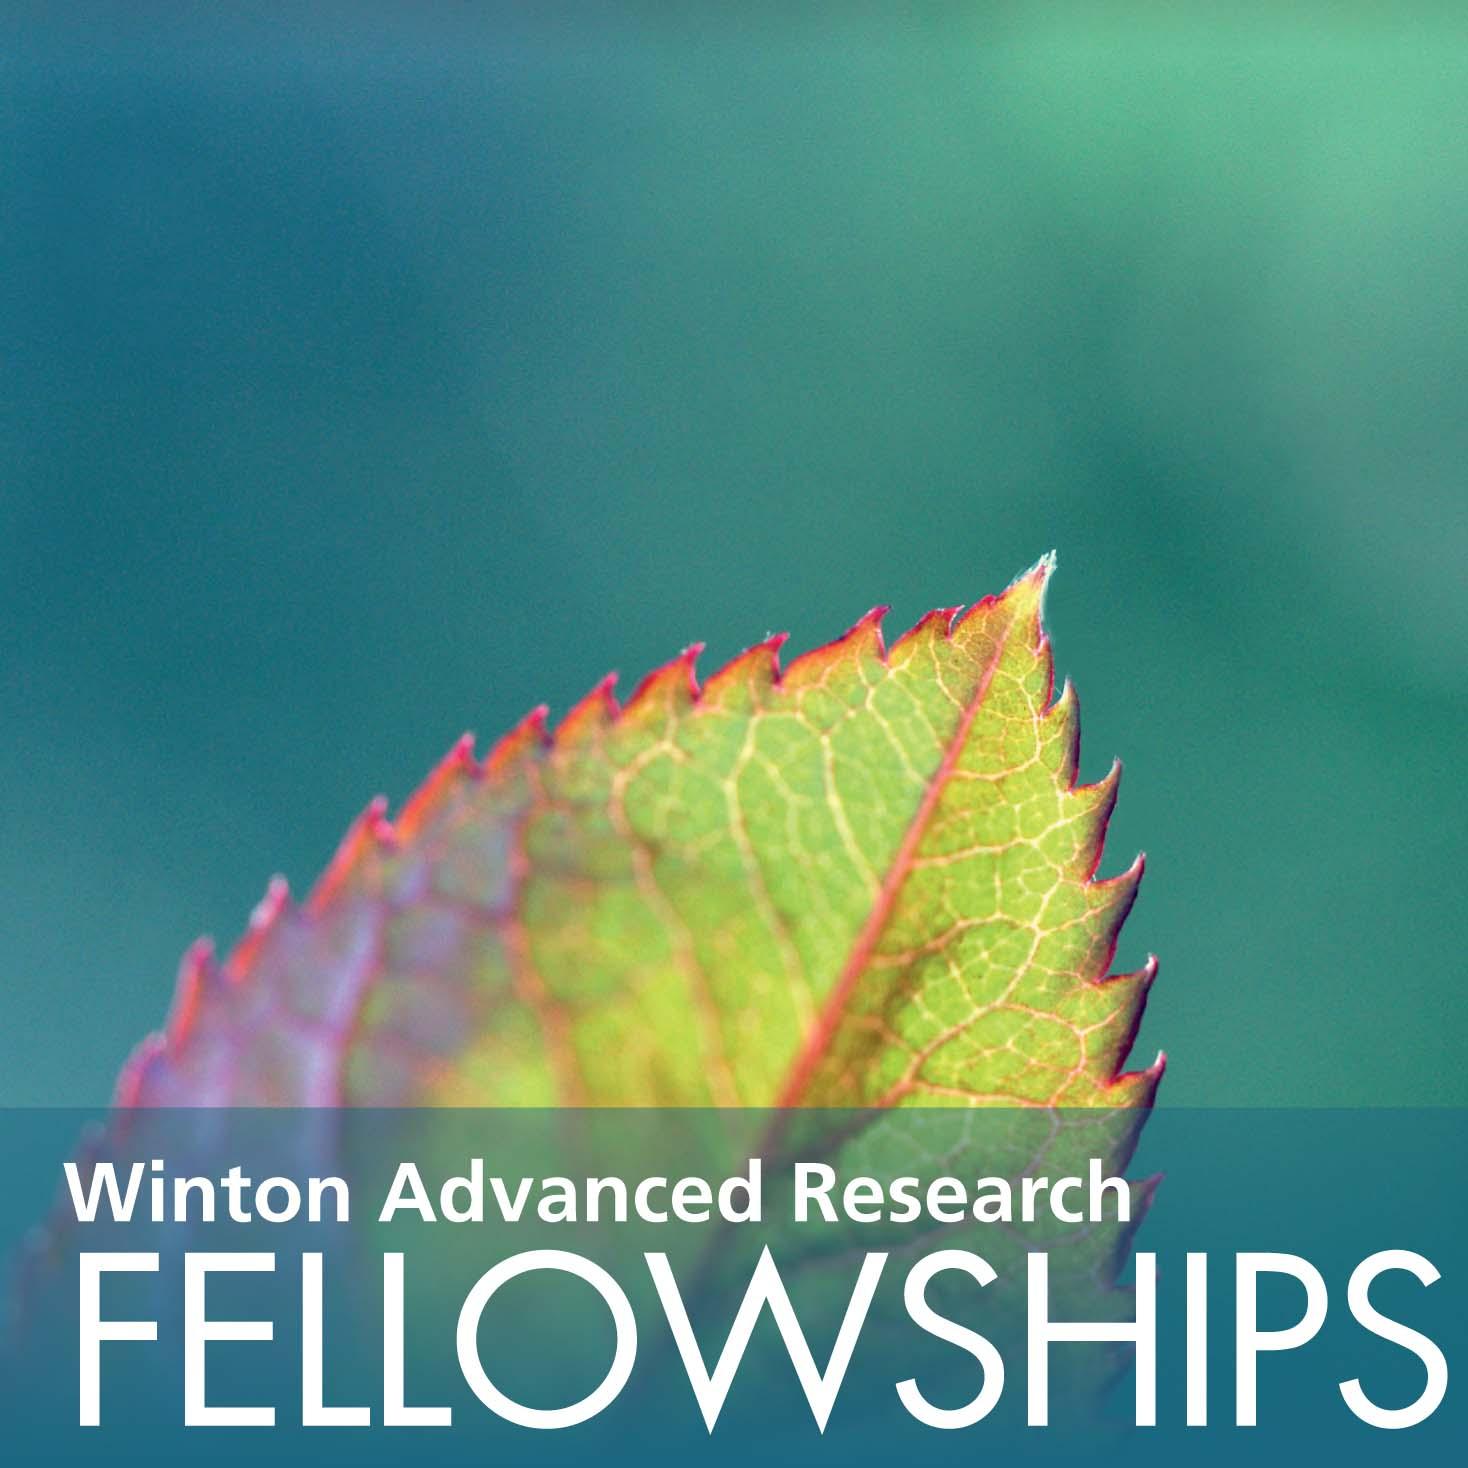 Winton Programme Appoints Three New Fellows